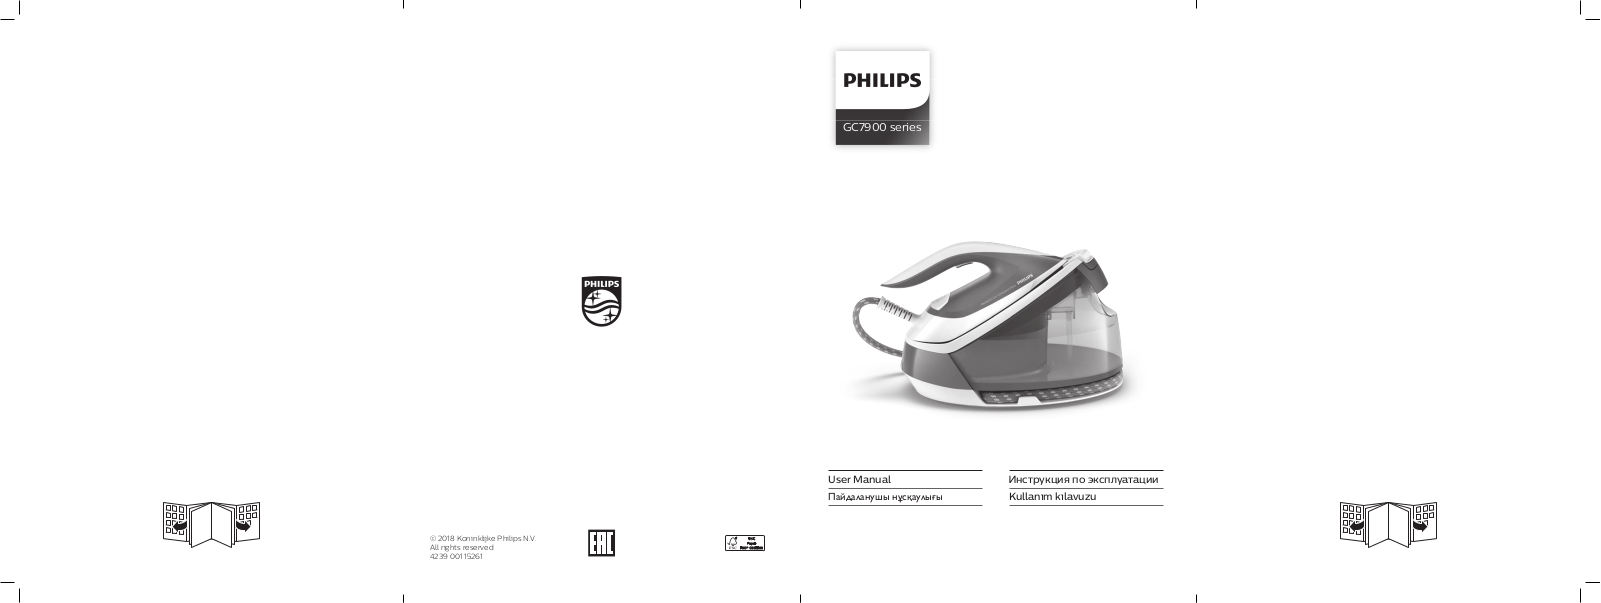 Philips GC7920/20 Manual